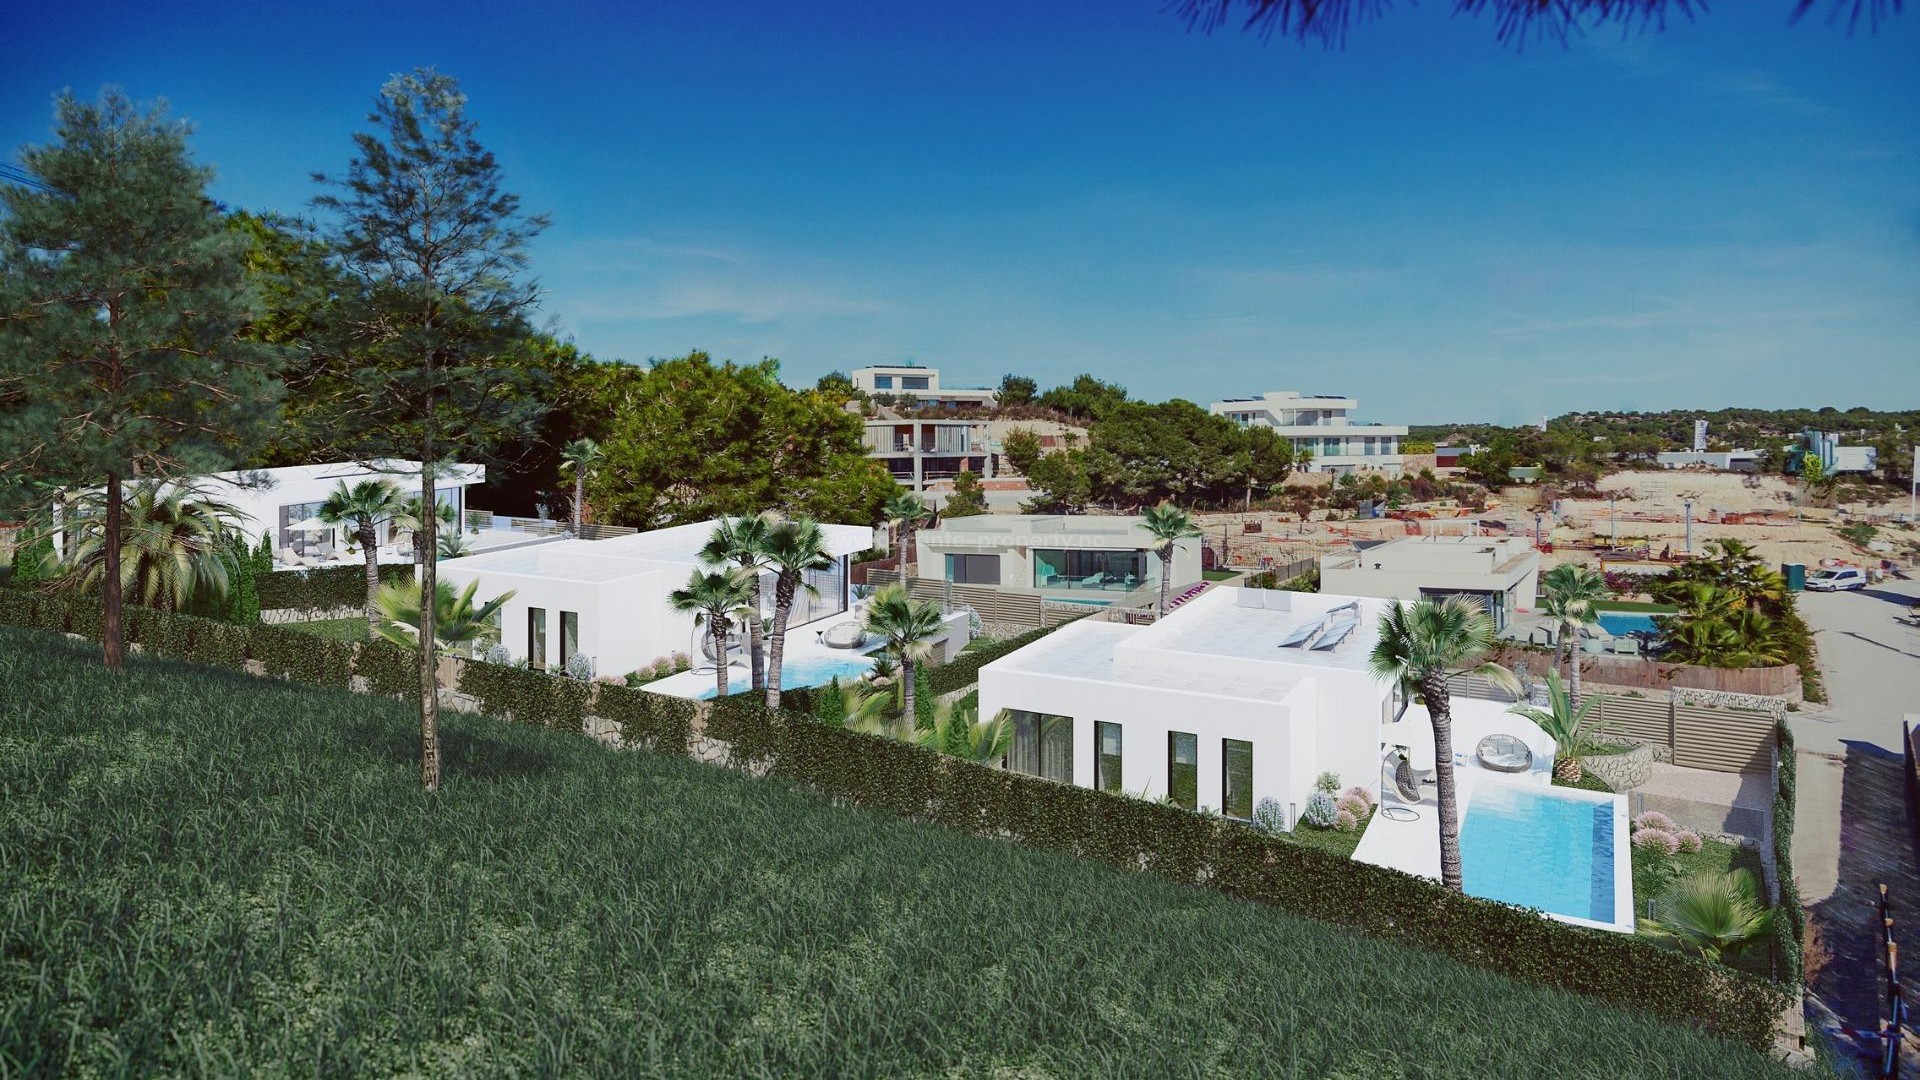 Nye hus/villa i Las Colinas Golf, 3 soverom, 3 bad, privat hage med basseng, romslige terrasser, kjeller med garasje, rolig beliggenhet